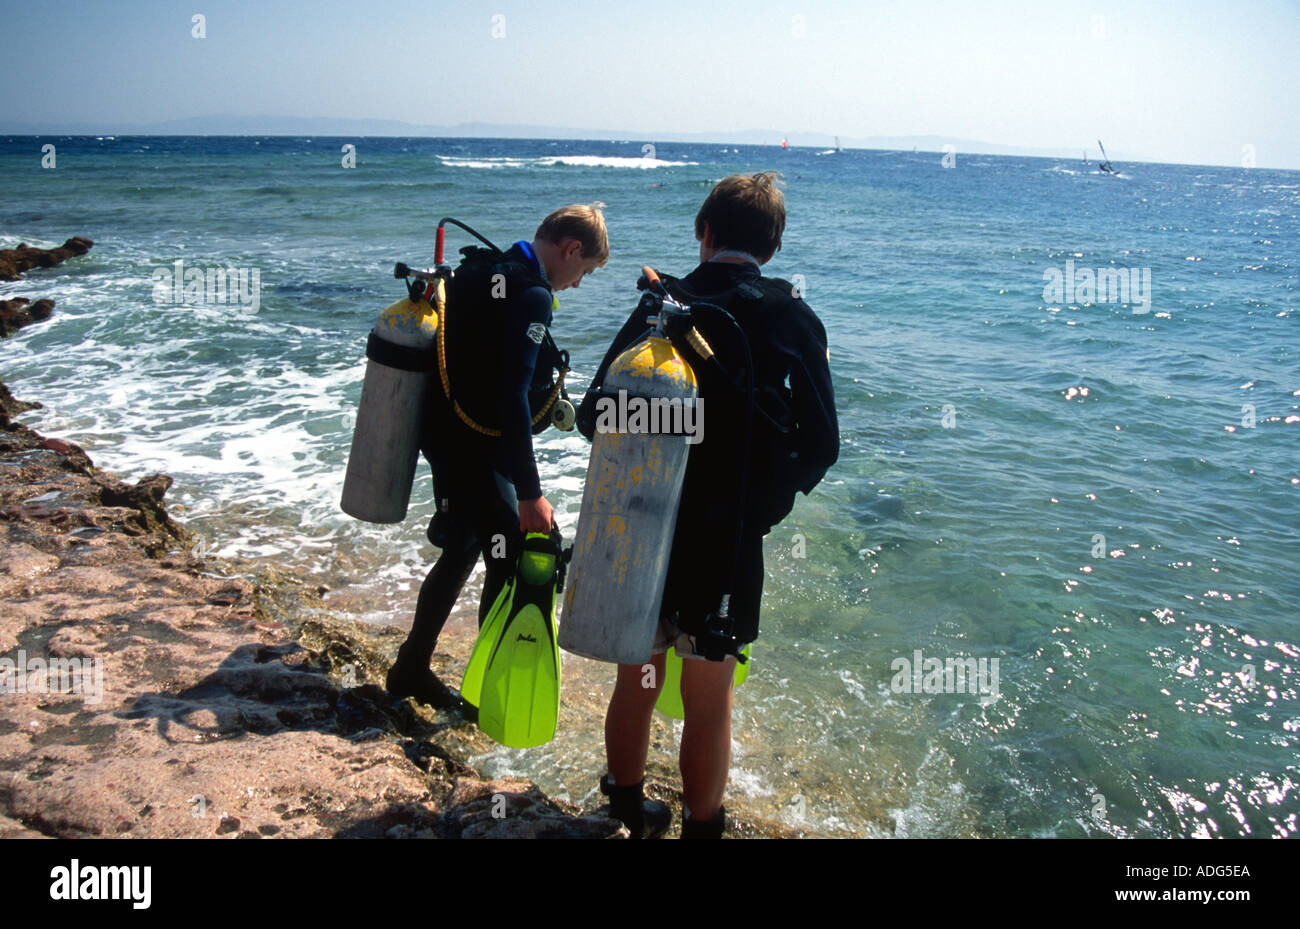 Two boys going scuba diving Junior Open Water Lighthouse Reef Dahab Sinai Red Sea Egypt Luke Hanna age 13 years Jordan Mayes age Stock Photo